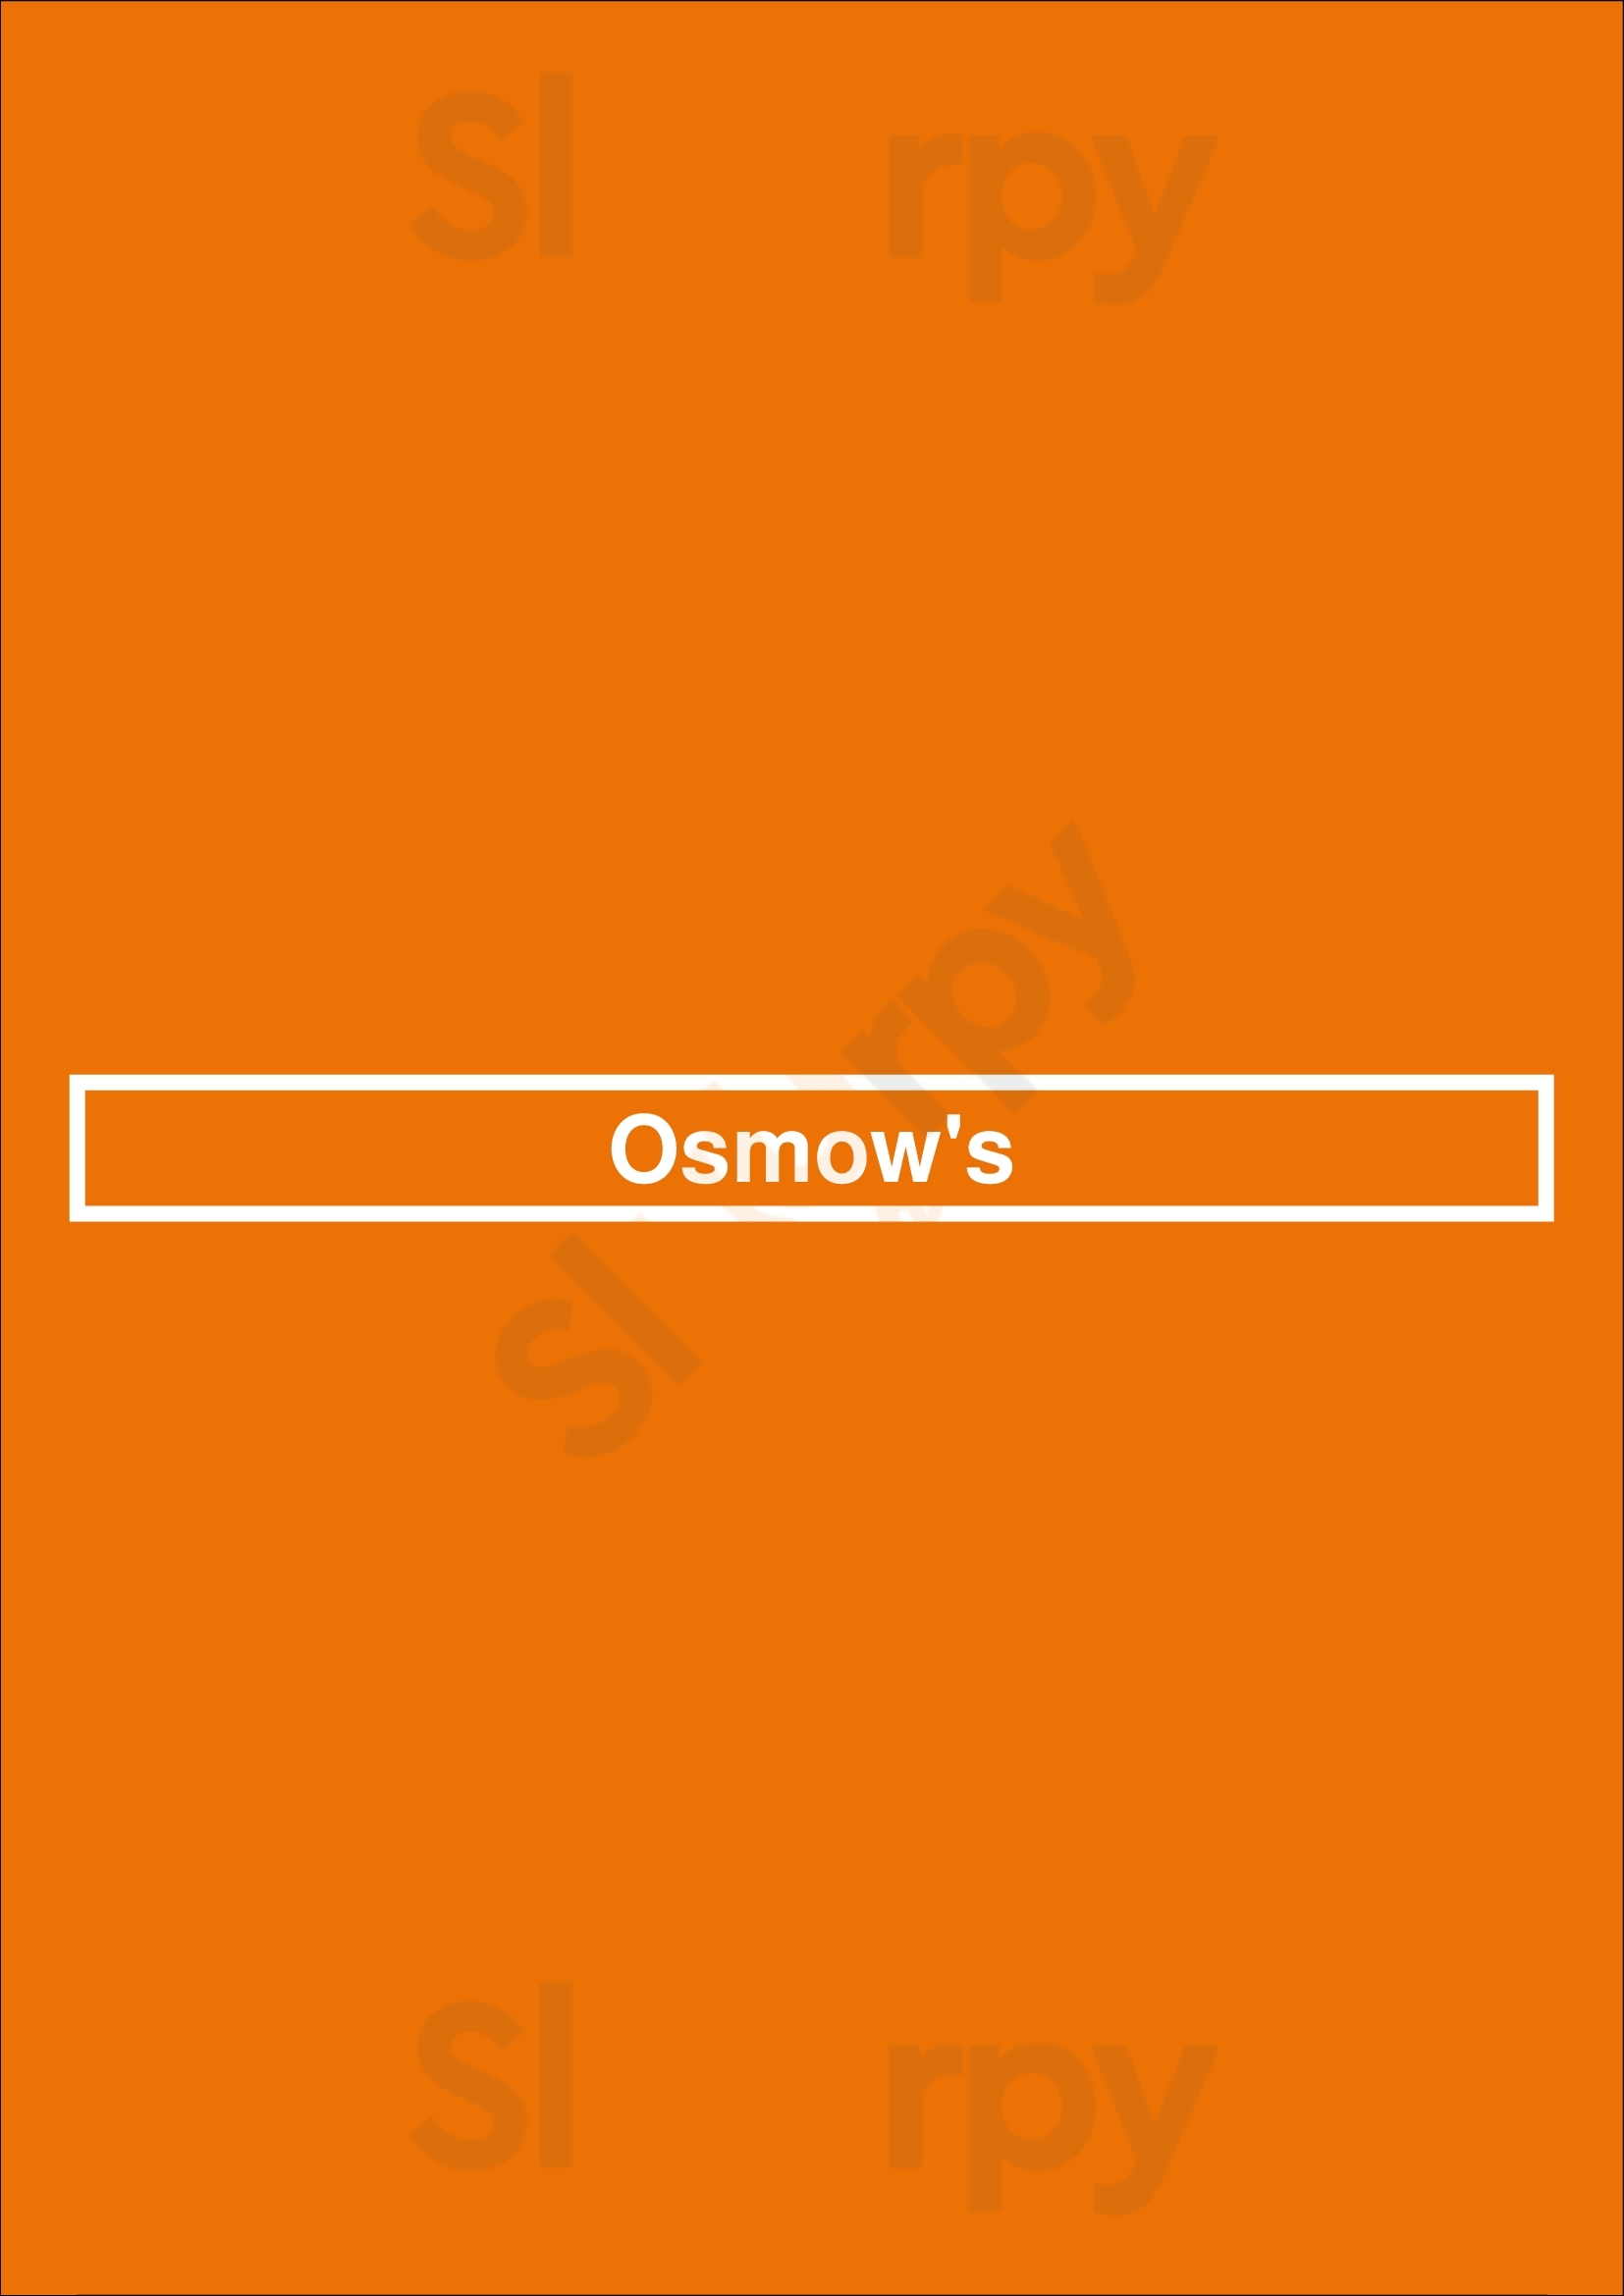 Osmow's Oshawa Menu - 1